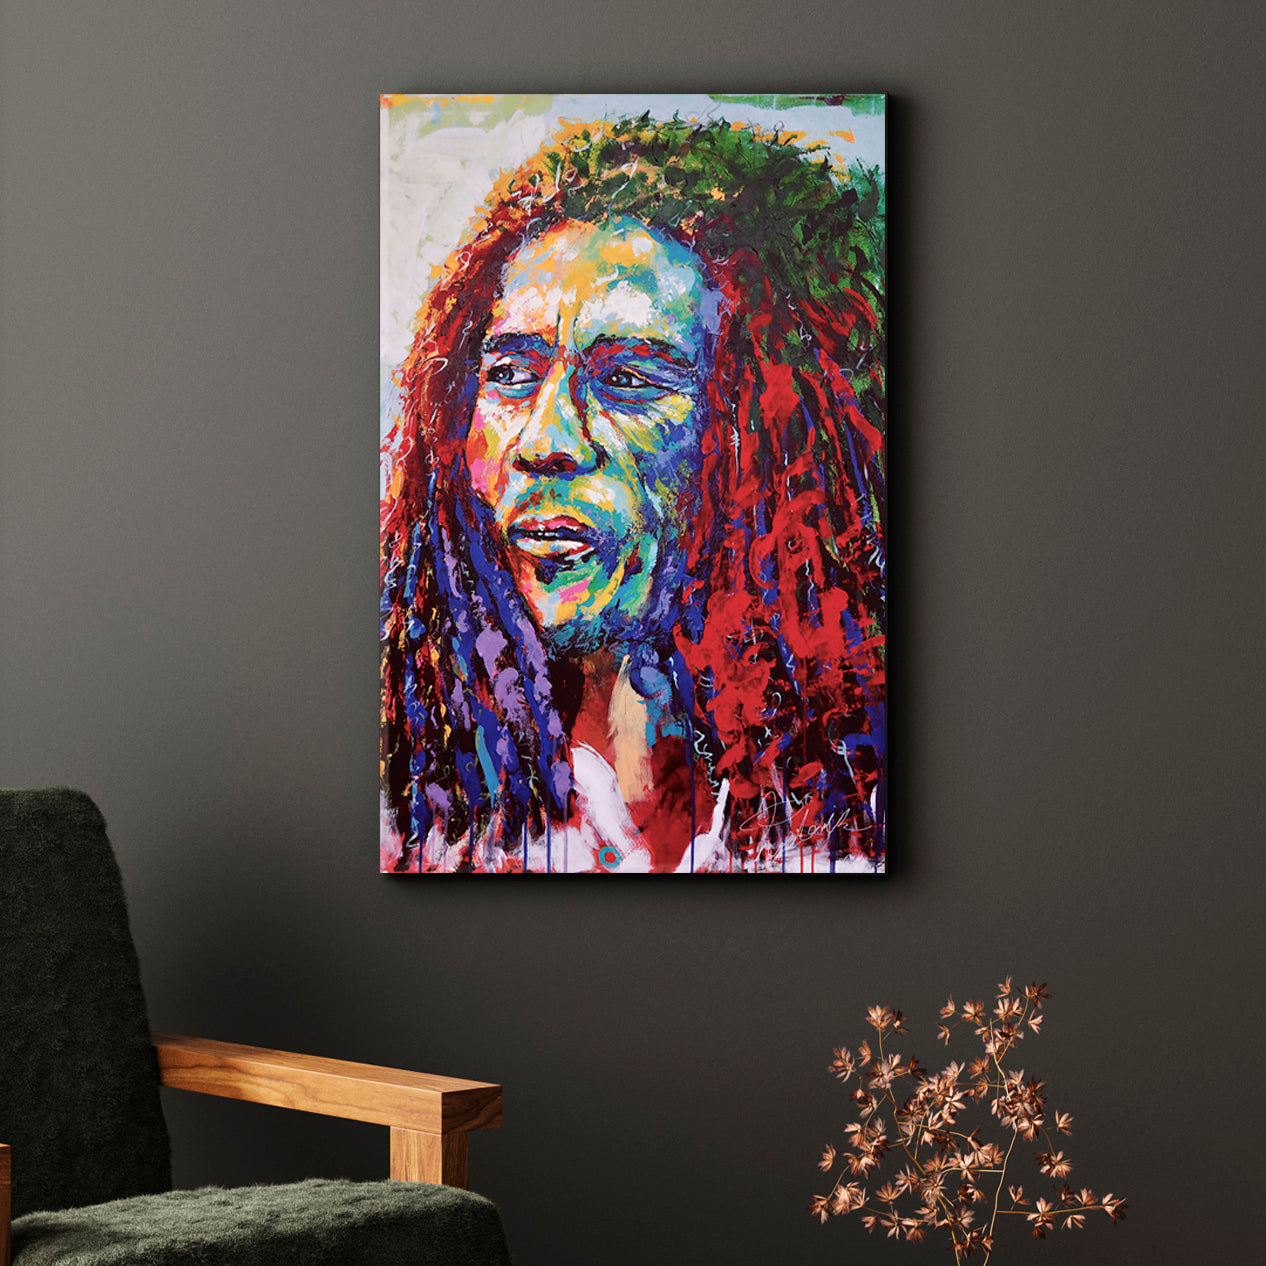 Bob Marley Jamaican Musician Celebrities Vivid Trendy Canvas Print - Vertical Celebs Canvas Print Artesty   